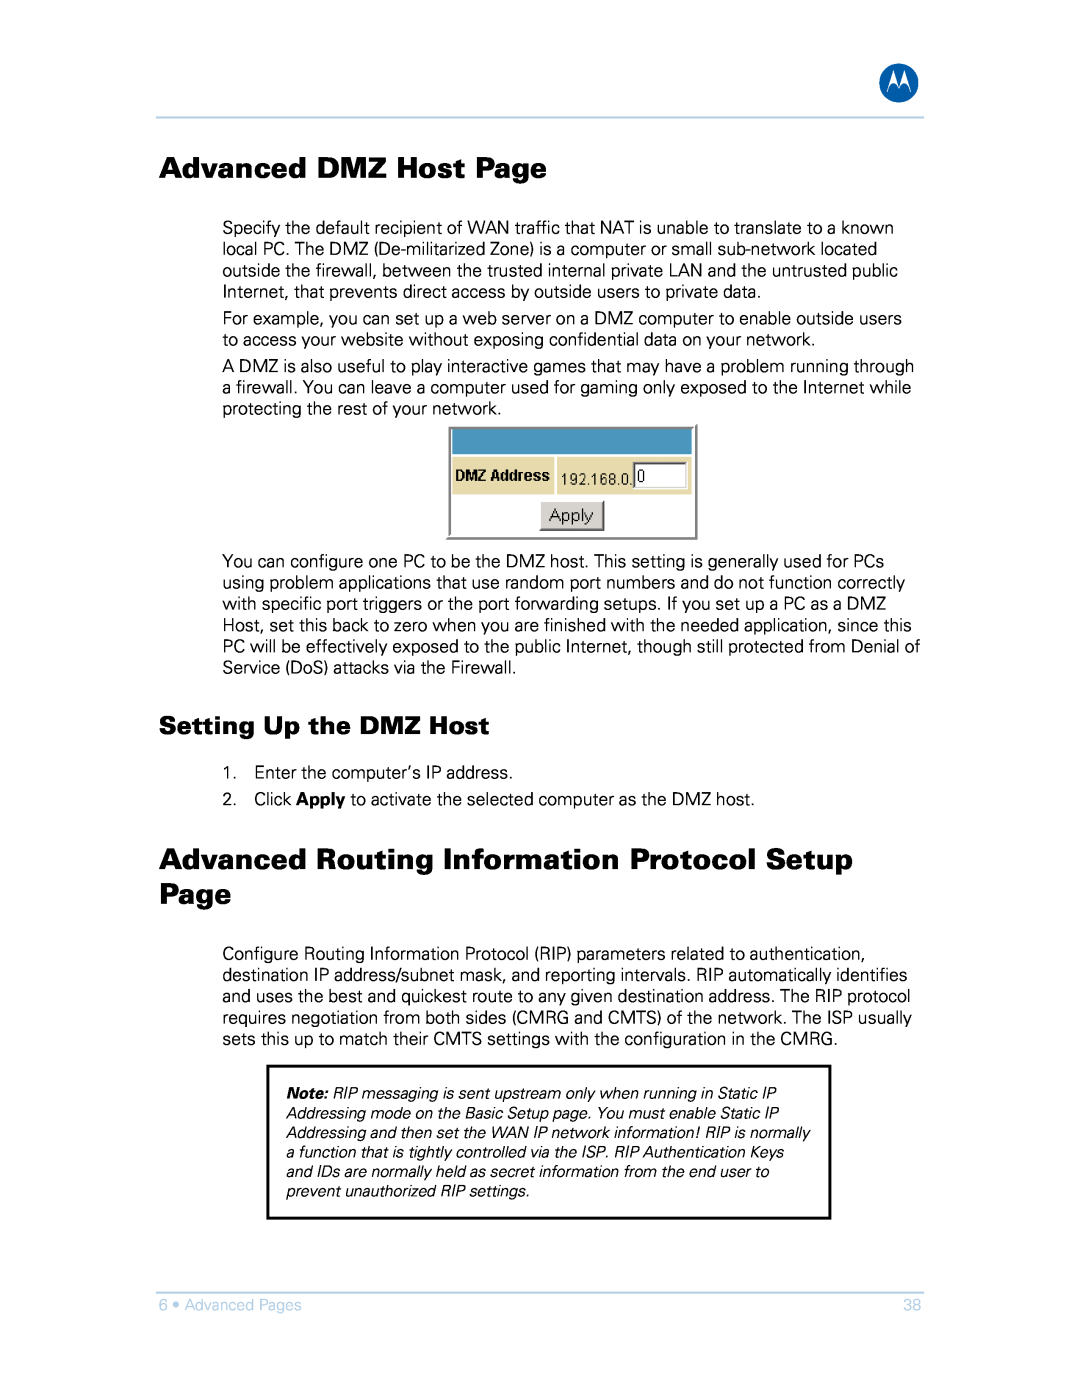 Motorola SVG1501UE manual Advanced DMZ Host Page, Advanced Routing Information Protocol Setup Page, Setting Up the DMZ Host 